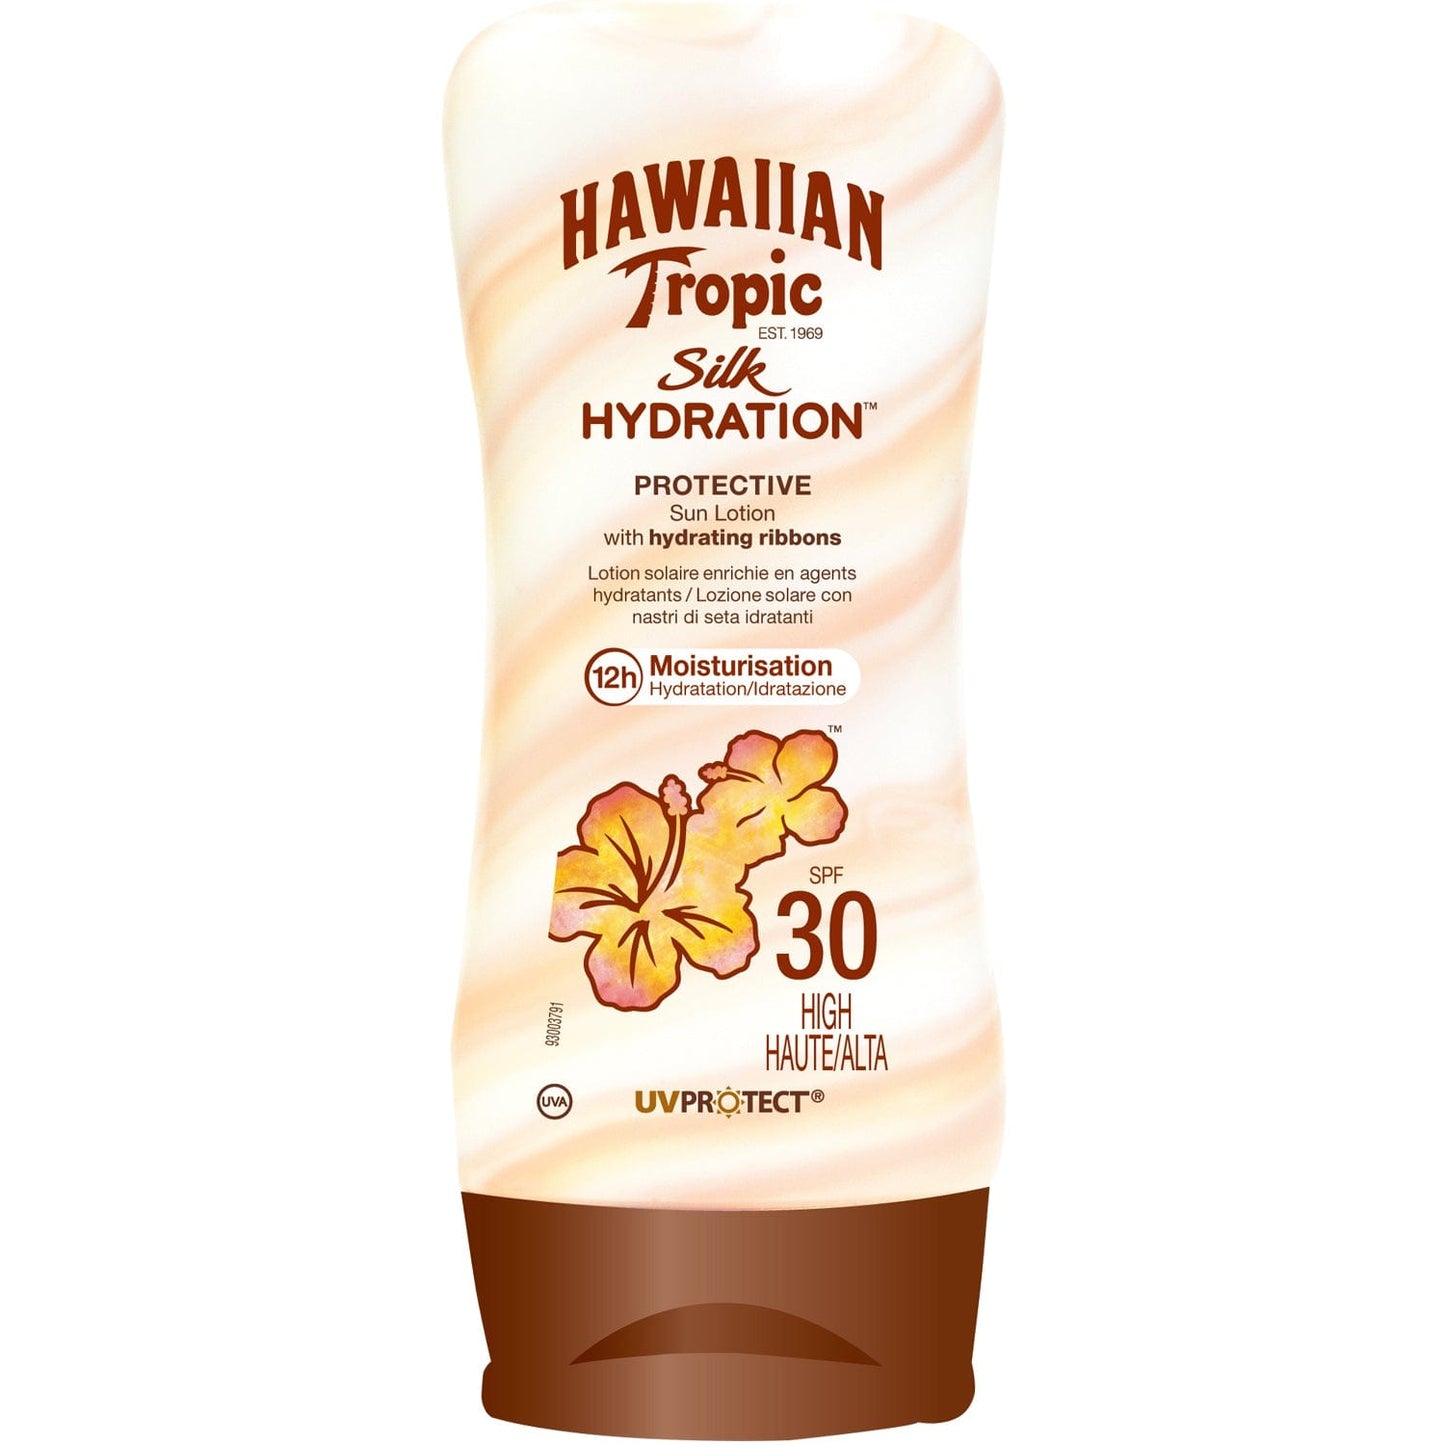 Hawaiian Tropic - Protective moisturizing lotion SPF 30 - Silk hydration - 180ml - Hawaiian Tropic - Ethni Beauty Market